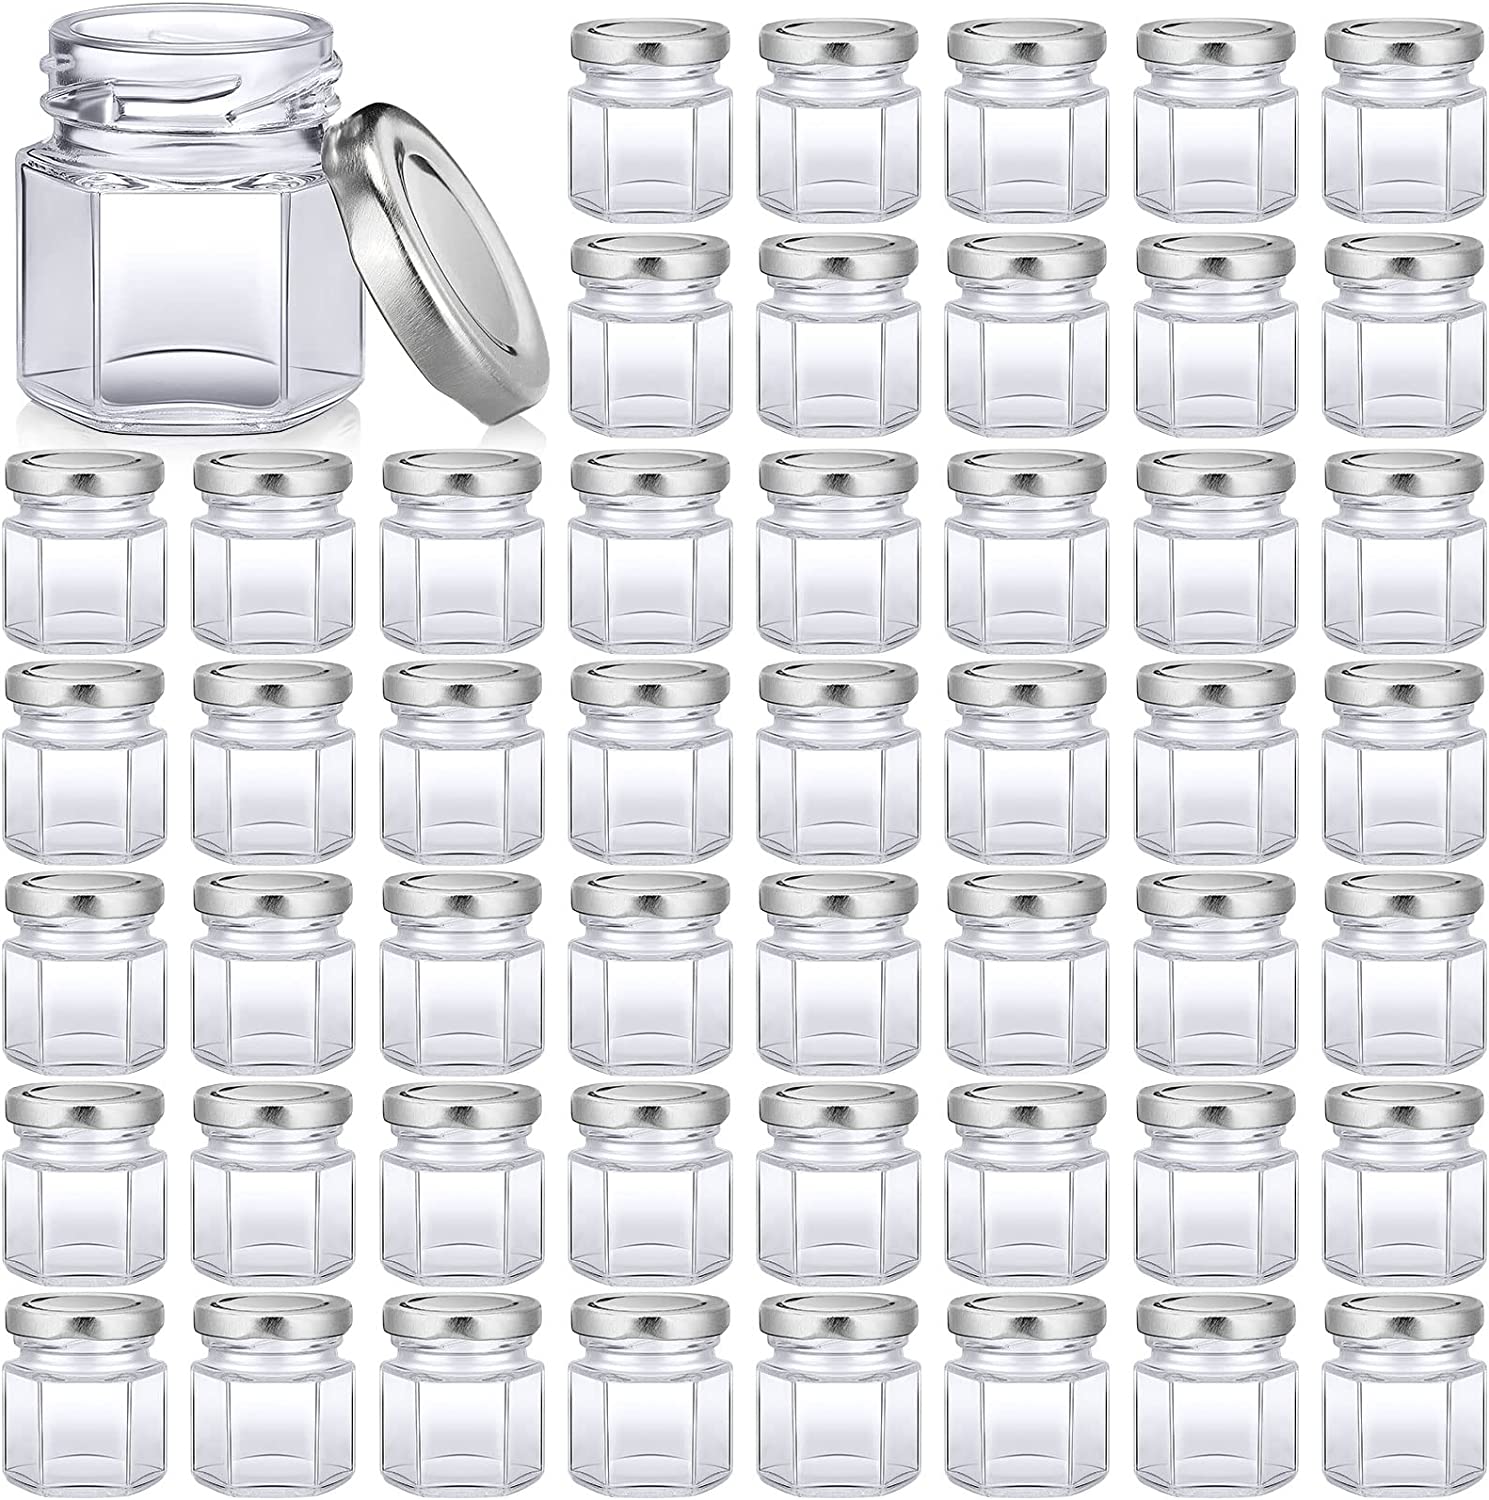 Superlele 30pcs 1.5oz Hexagon Mini Glass Jars with Gold Lids, Honey Jars  Small Spice Jars